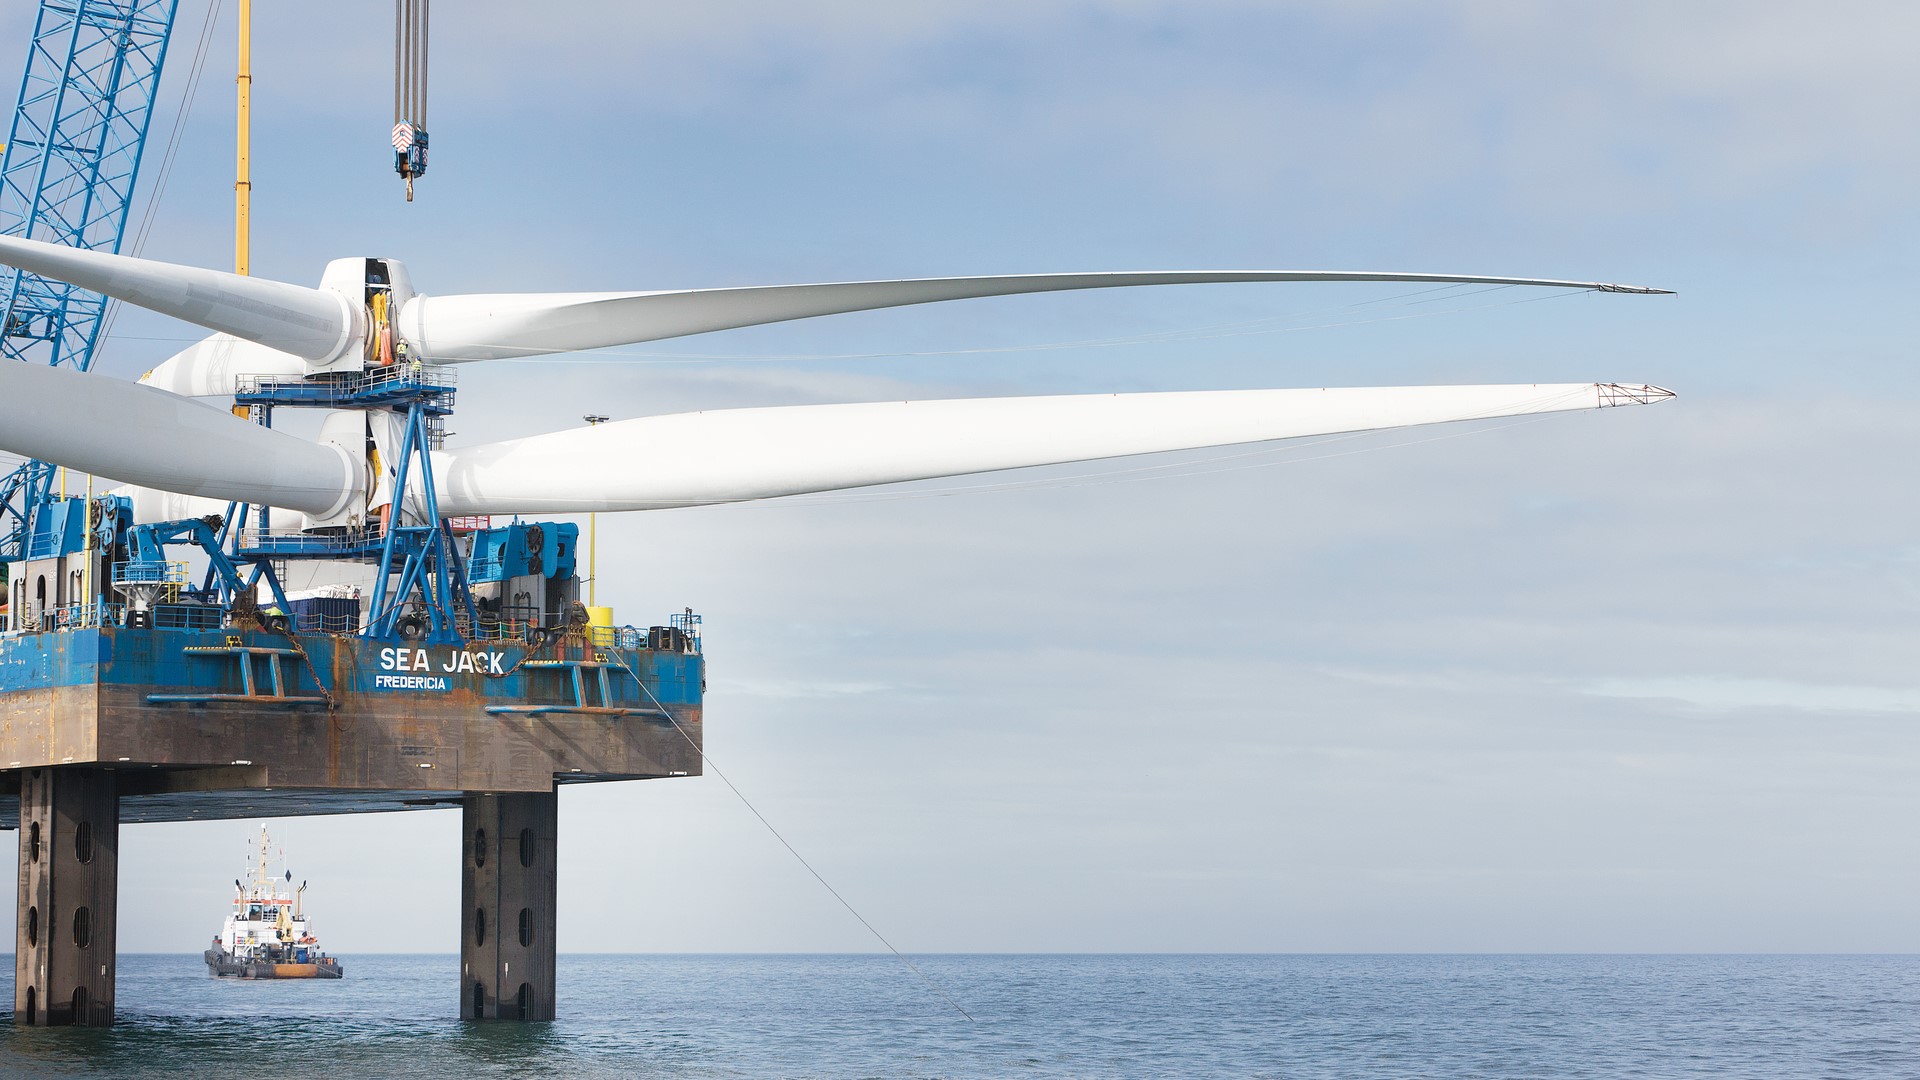 Ormonde Offshore Wind Farm Construction